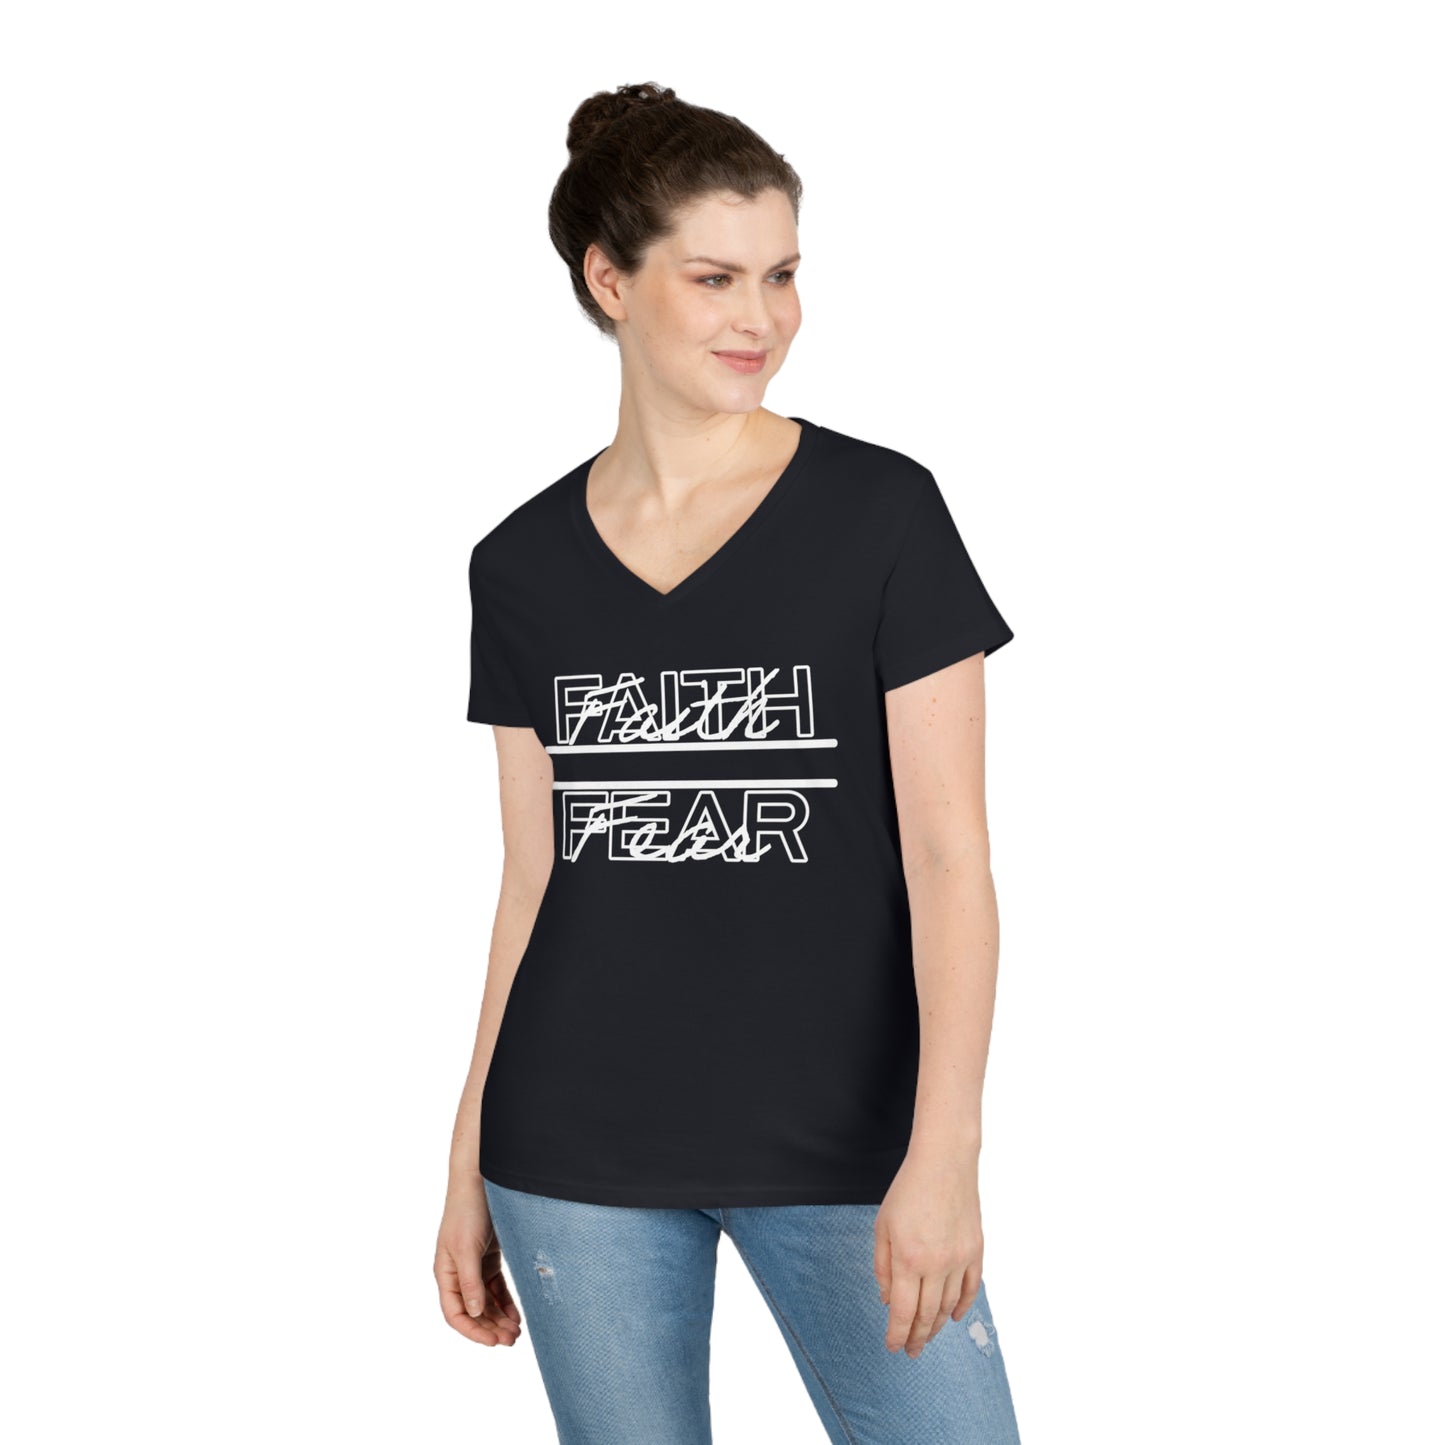 Ladies' V-Neck T-Shirt, Bible Verse Shirt, Women's V Neck Short Sleeve T-Shirt